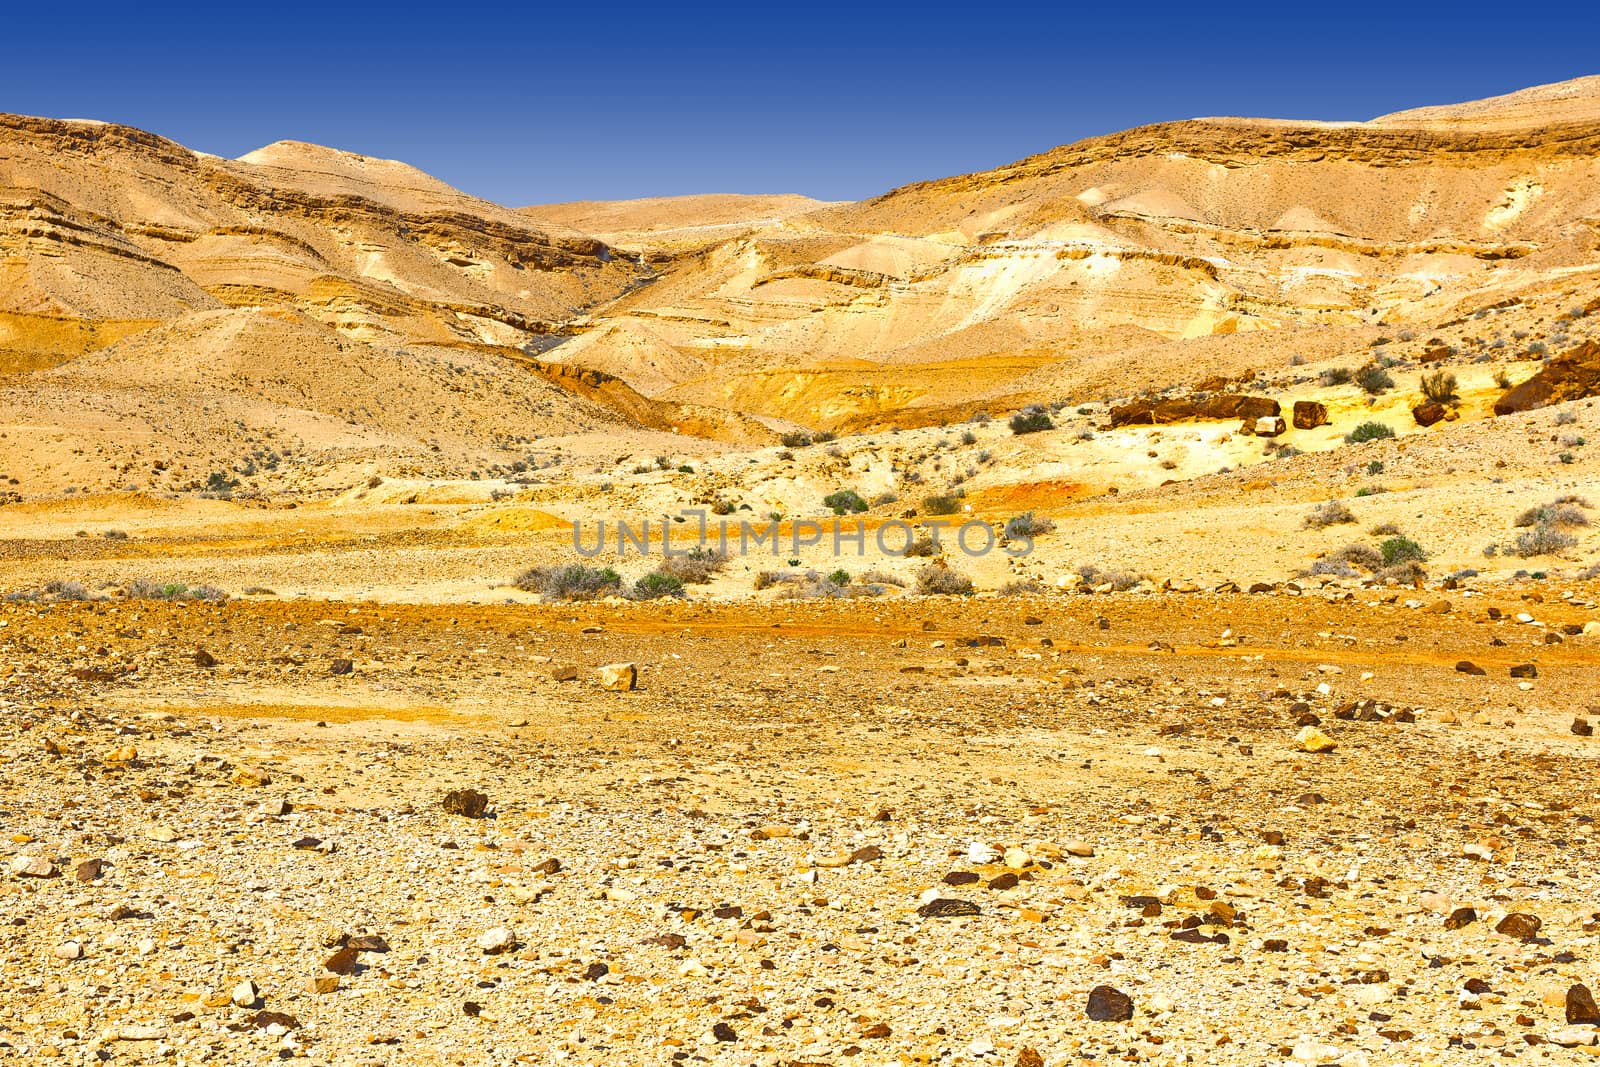 Desert in Israel by gkuna